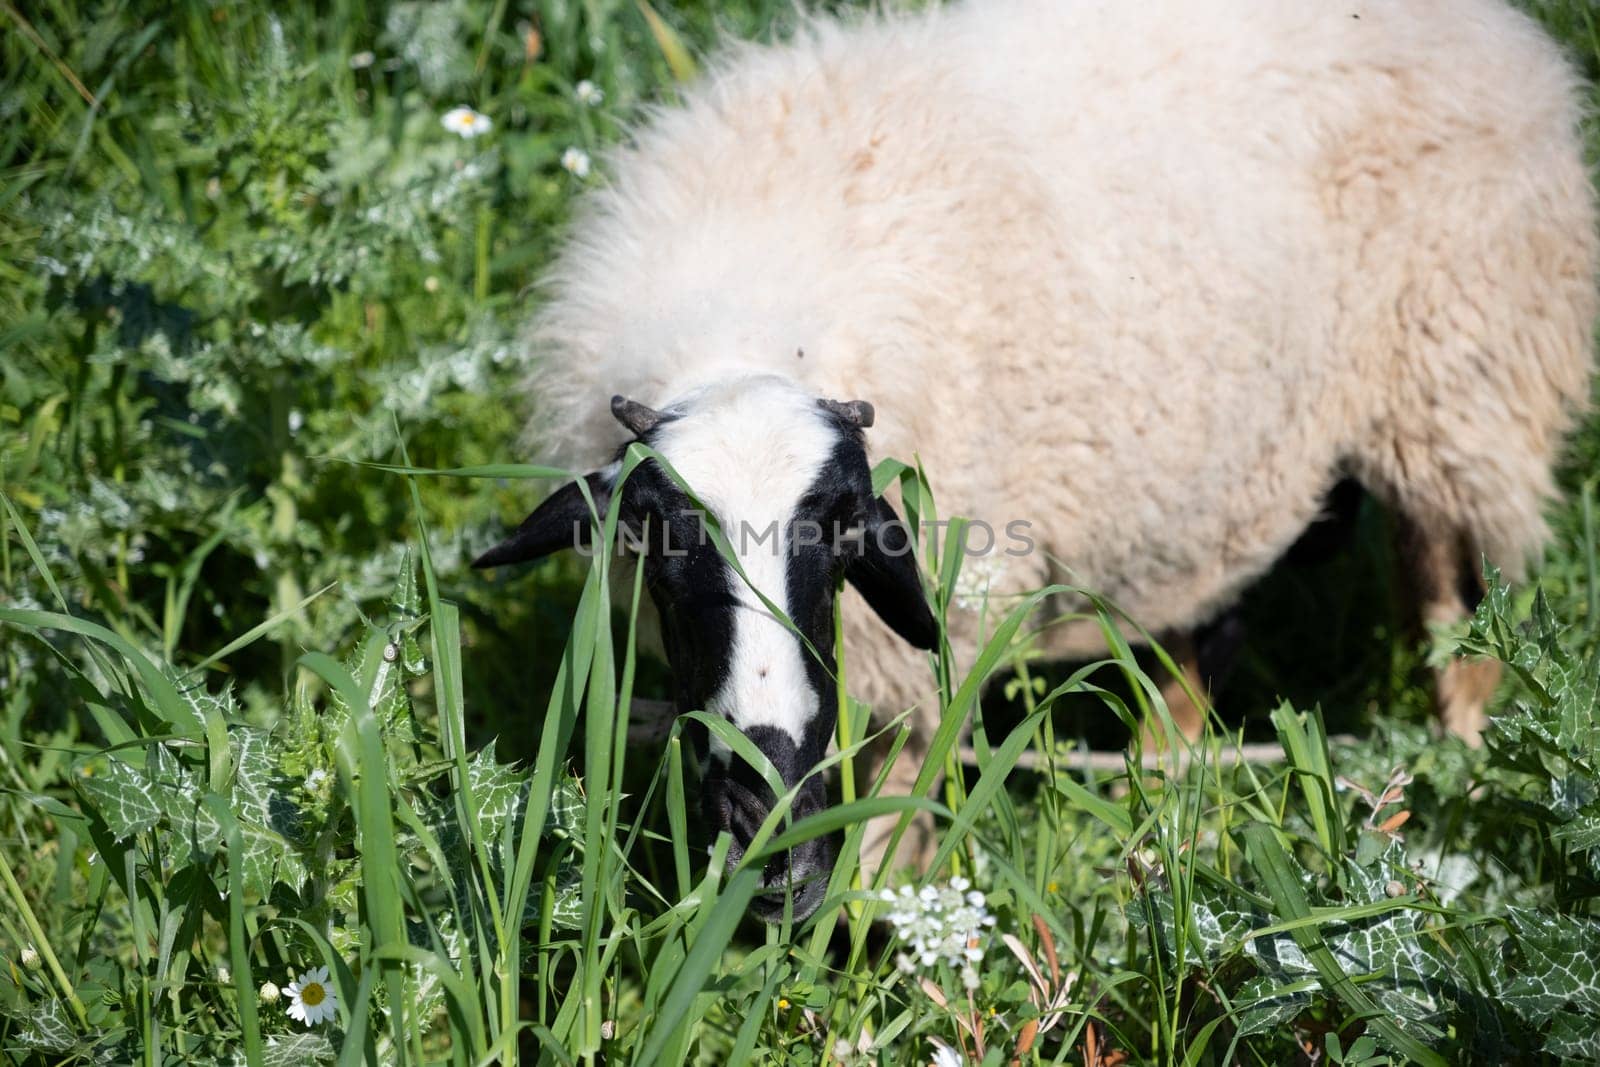 sheep grazing in the green field by senkaya